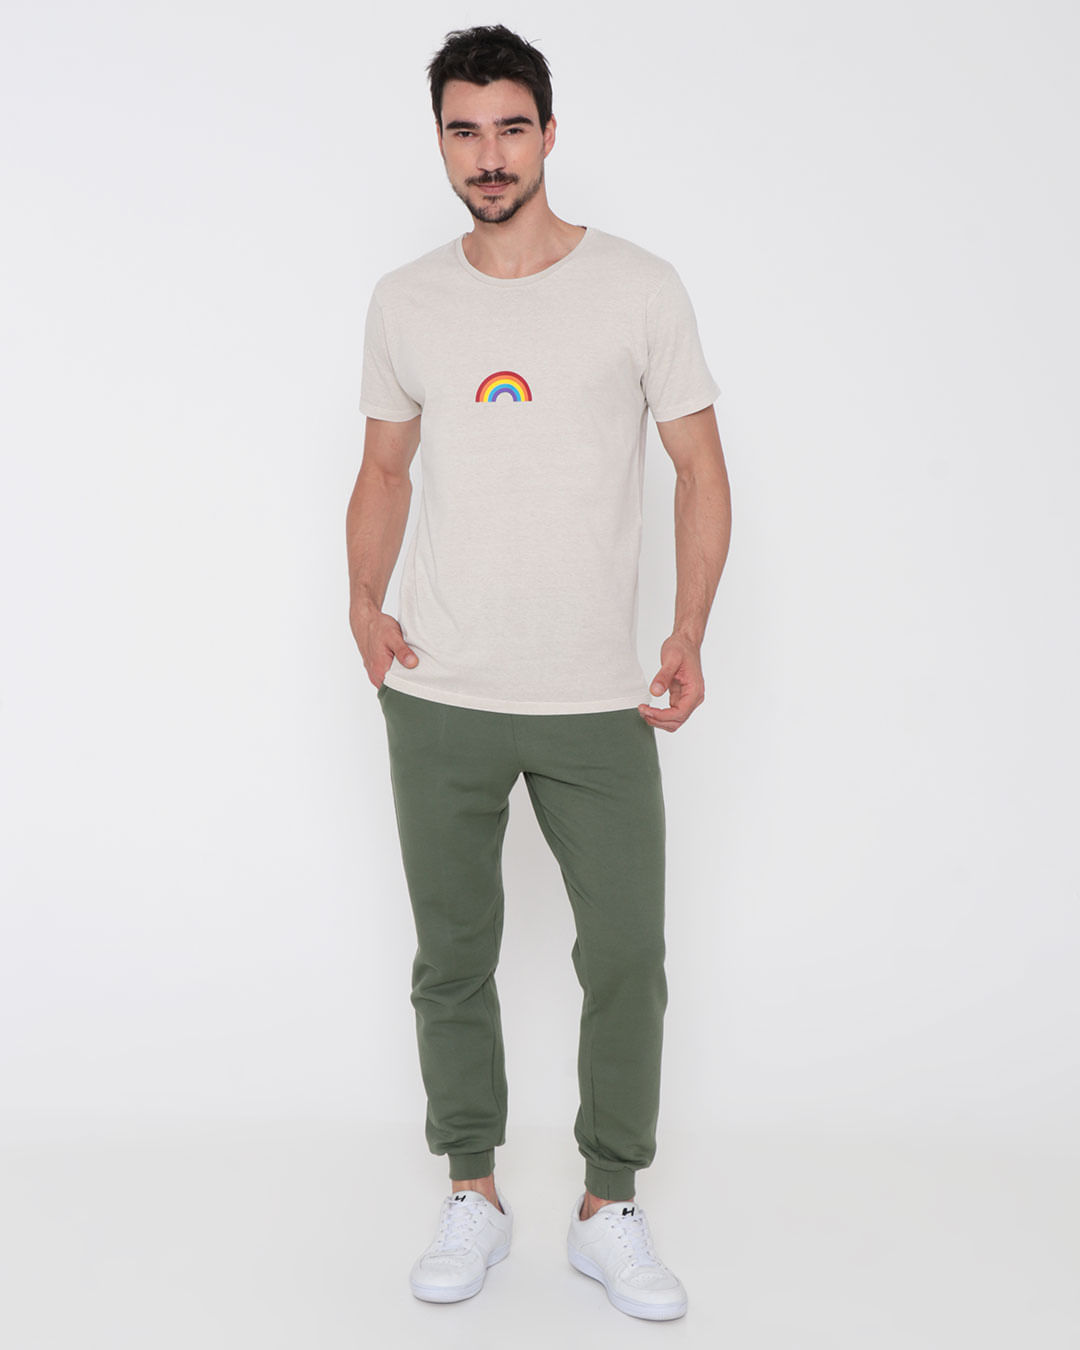 Camiseta-Masculina-Estampa-Arco-iris-Bege-Claro